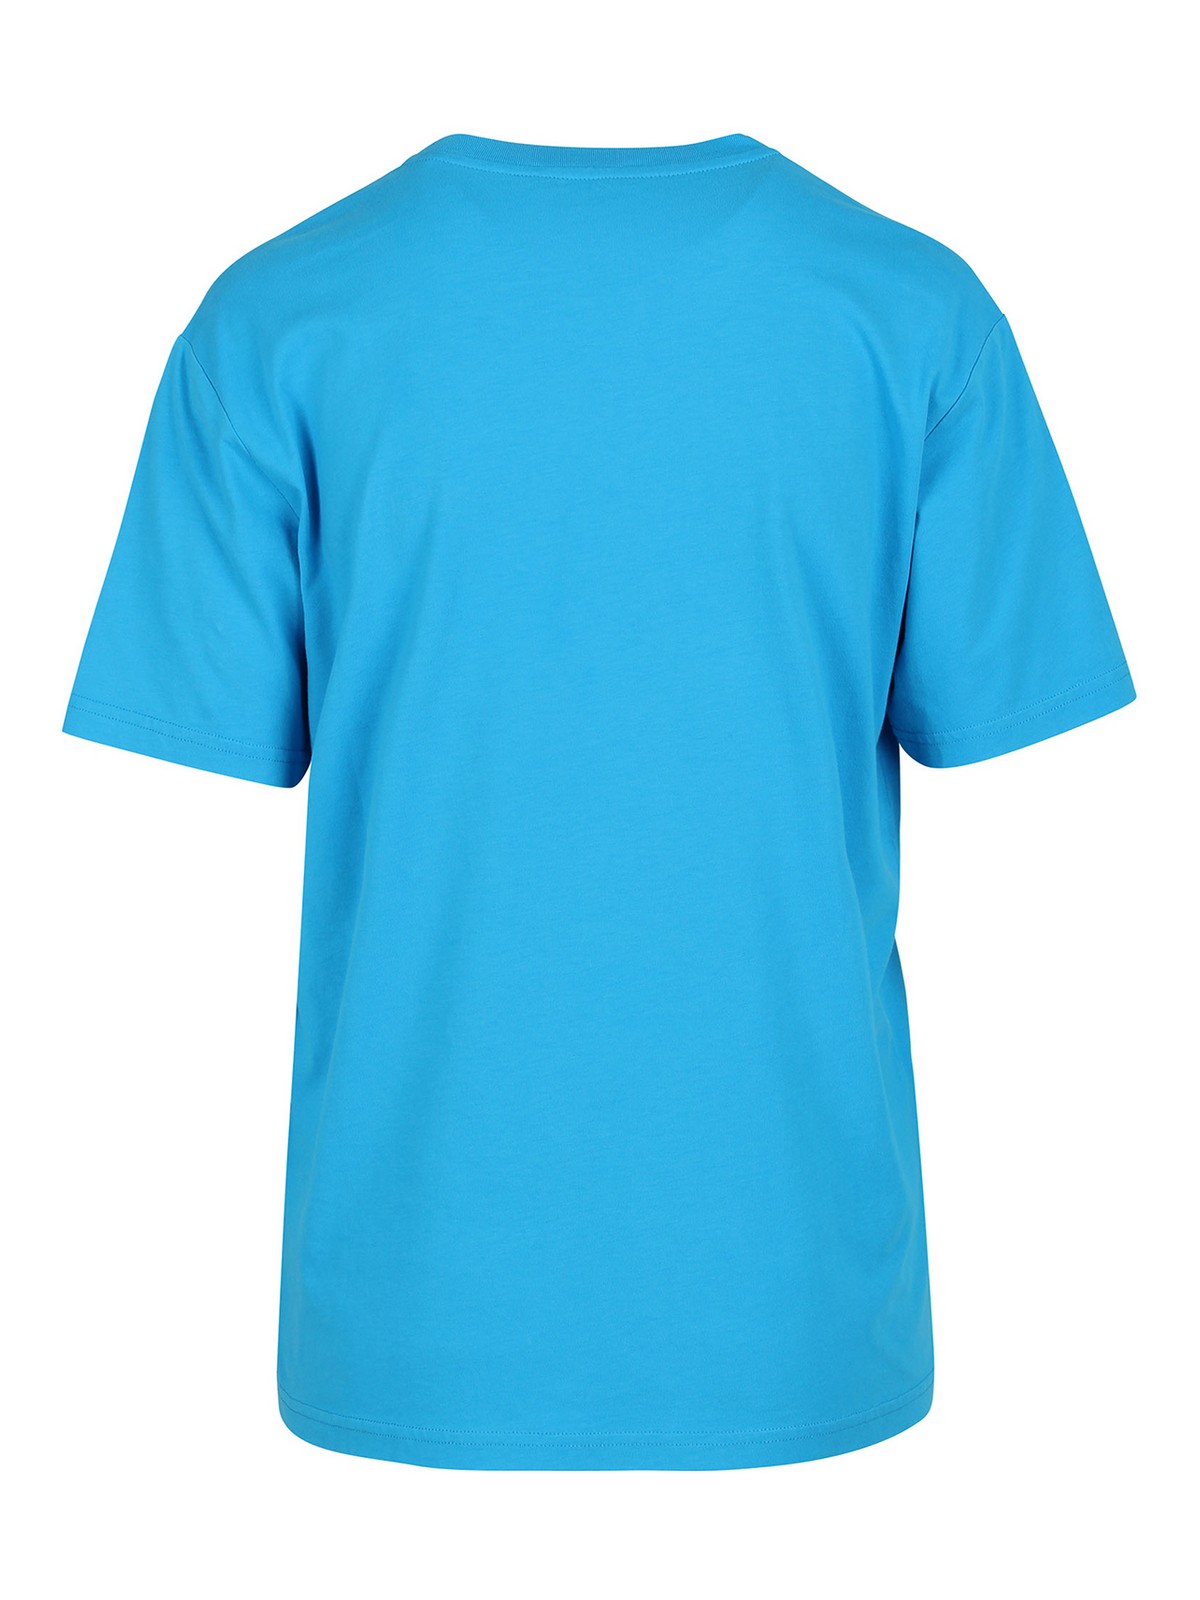 Camisetas Nina Ricci - Camiseta - Azul - 22EJT0035C00952U444